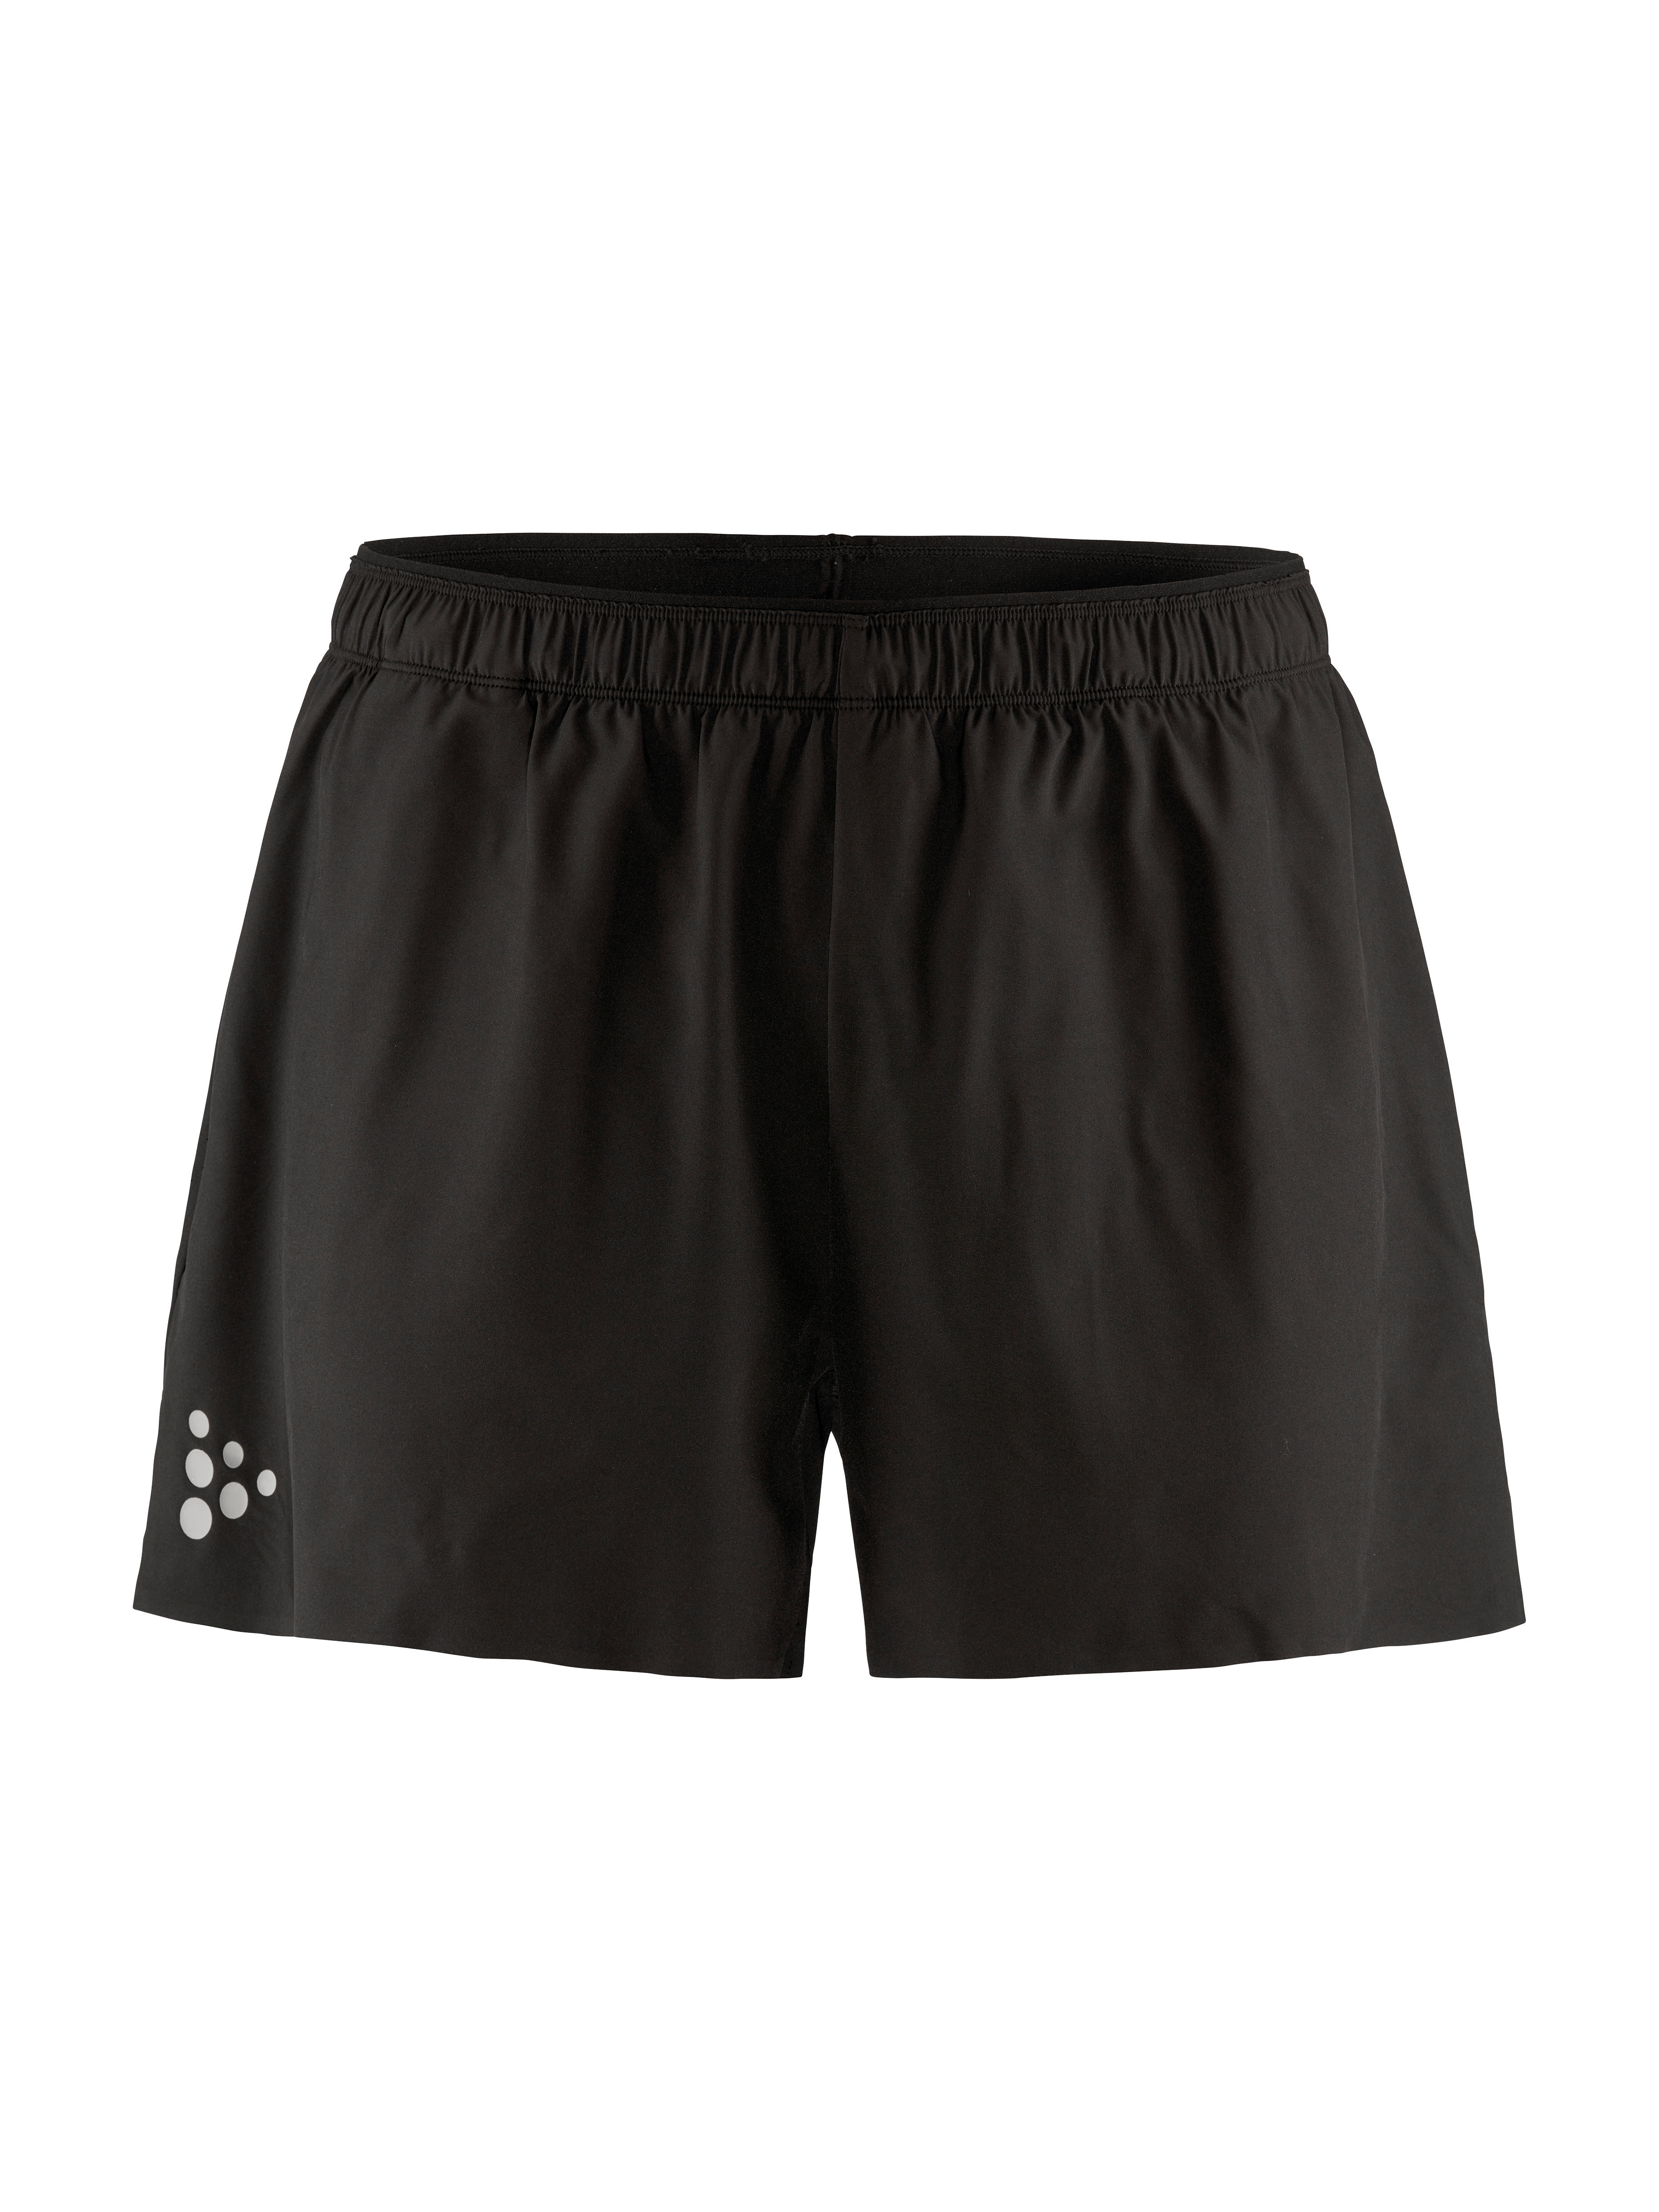 Craft Men's Pro Hypervent 2in1 Shorts 2 Black